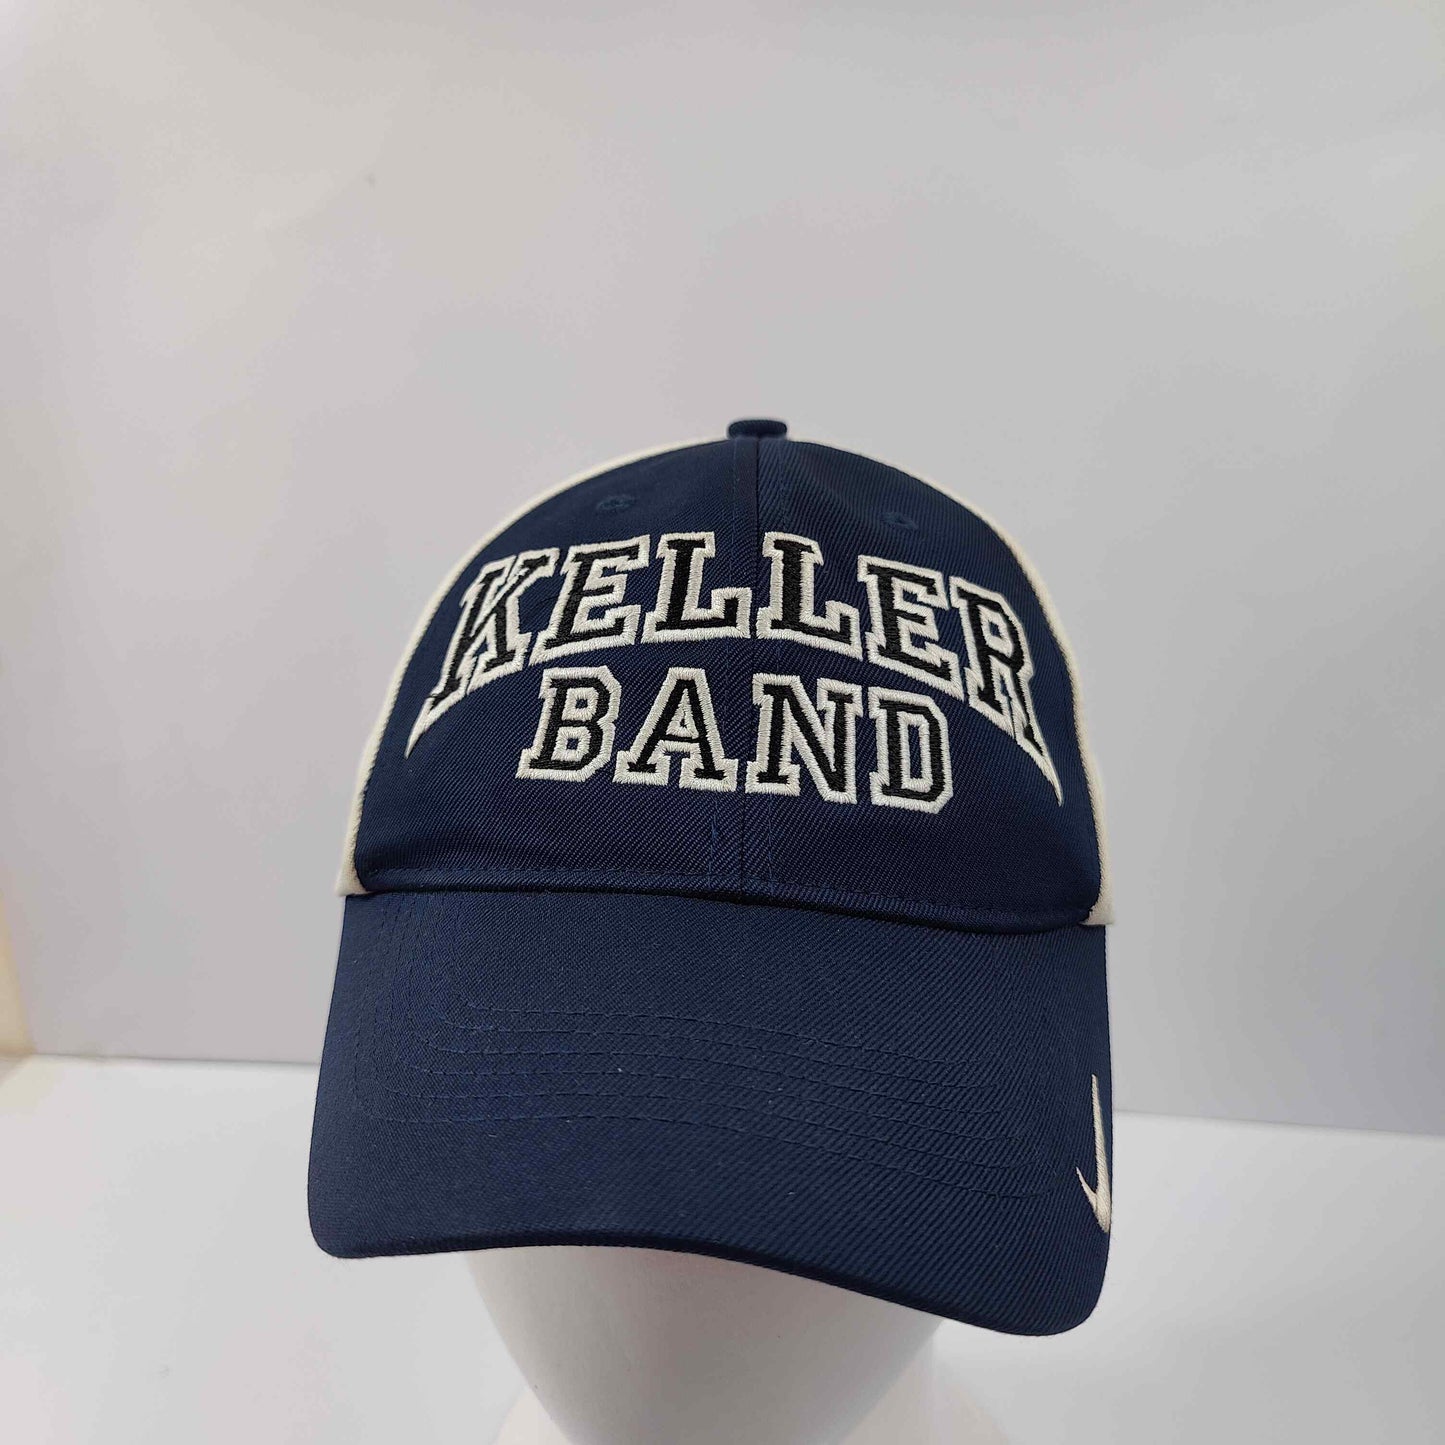 Nike Keller Band Fixed Cap - Blue - 1266